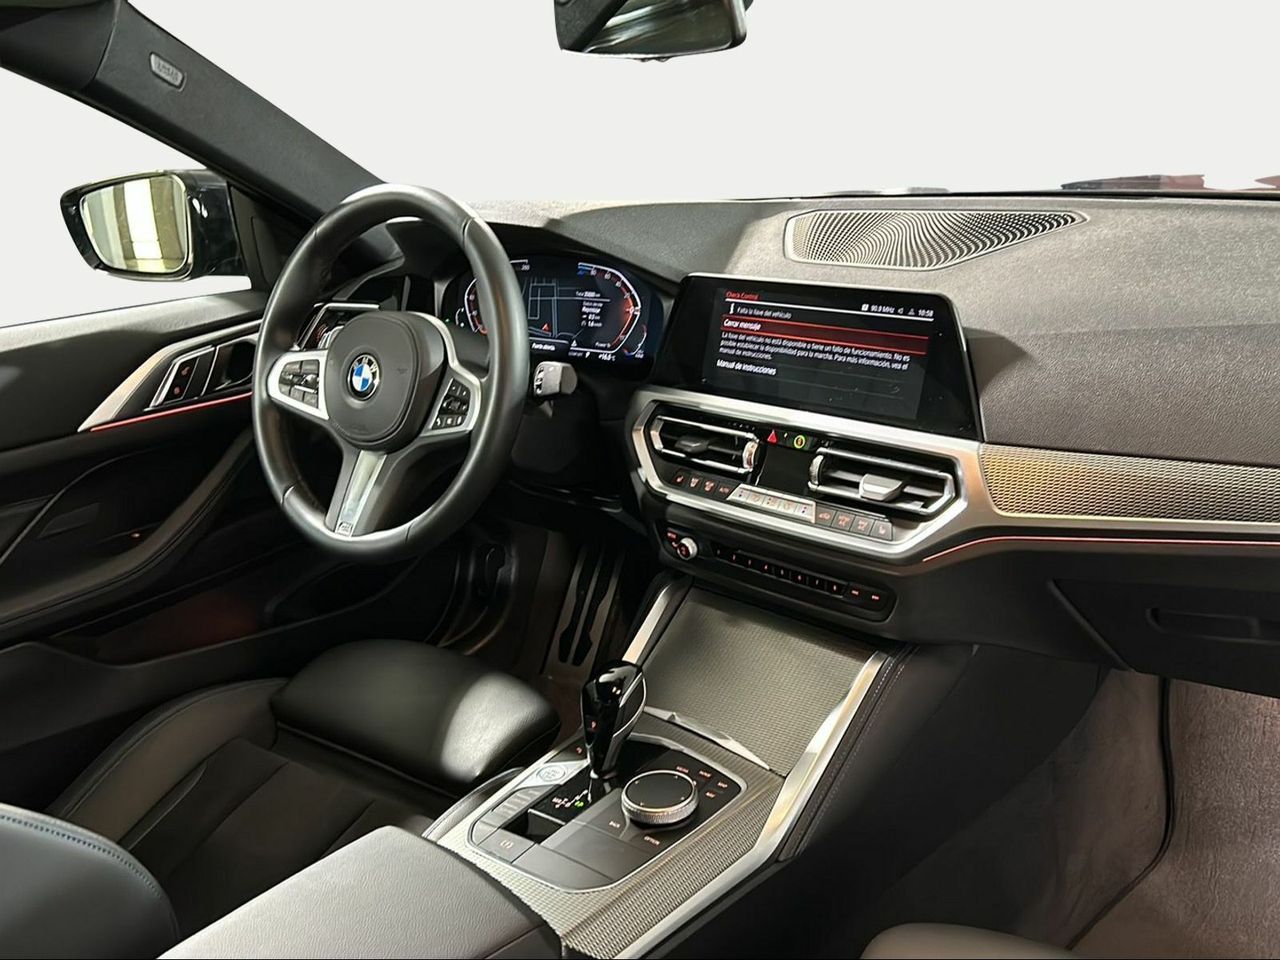 Foto BMW Serie 4 8